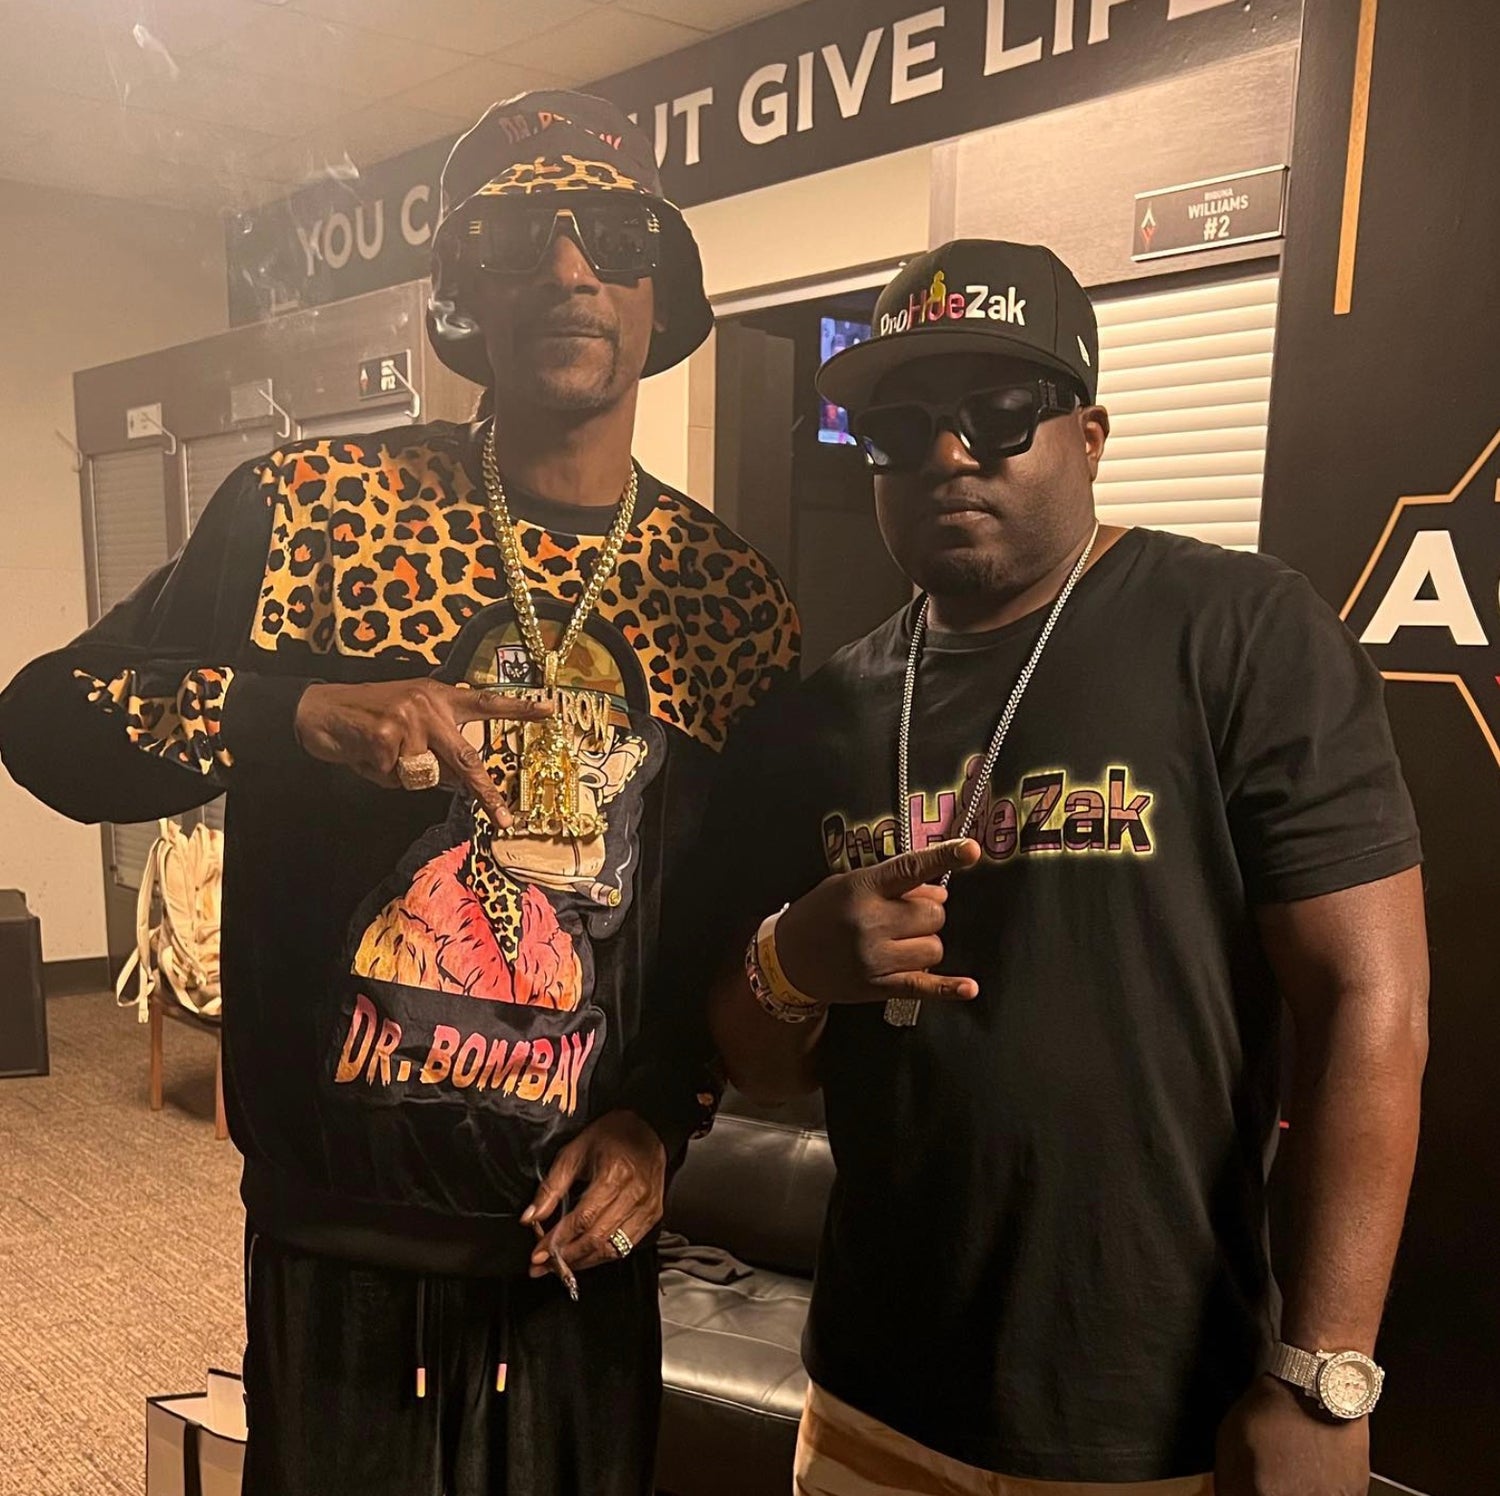 Snoop Dogg and ProHoeZak